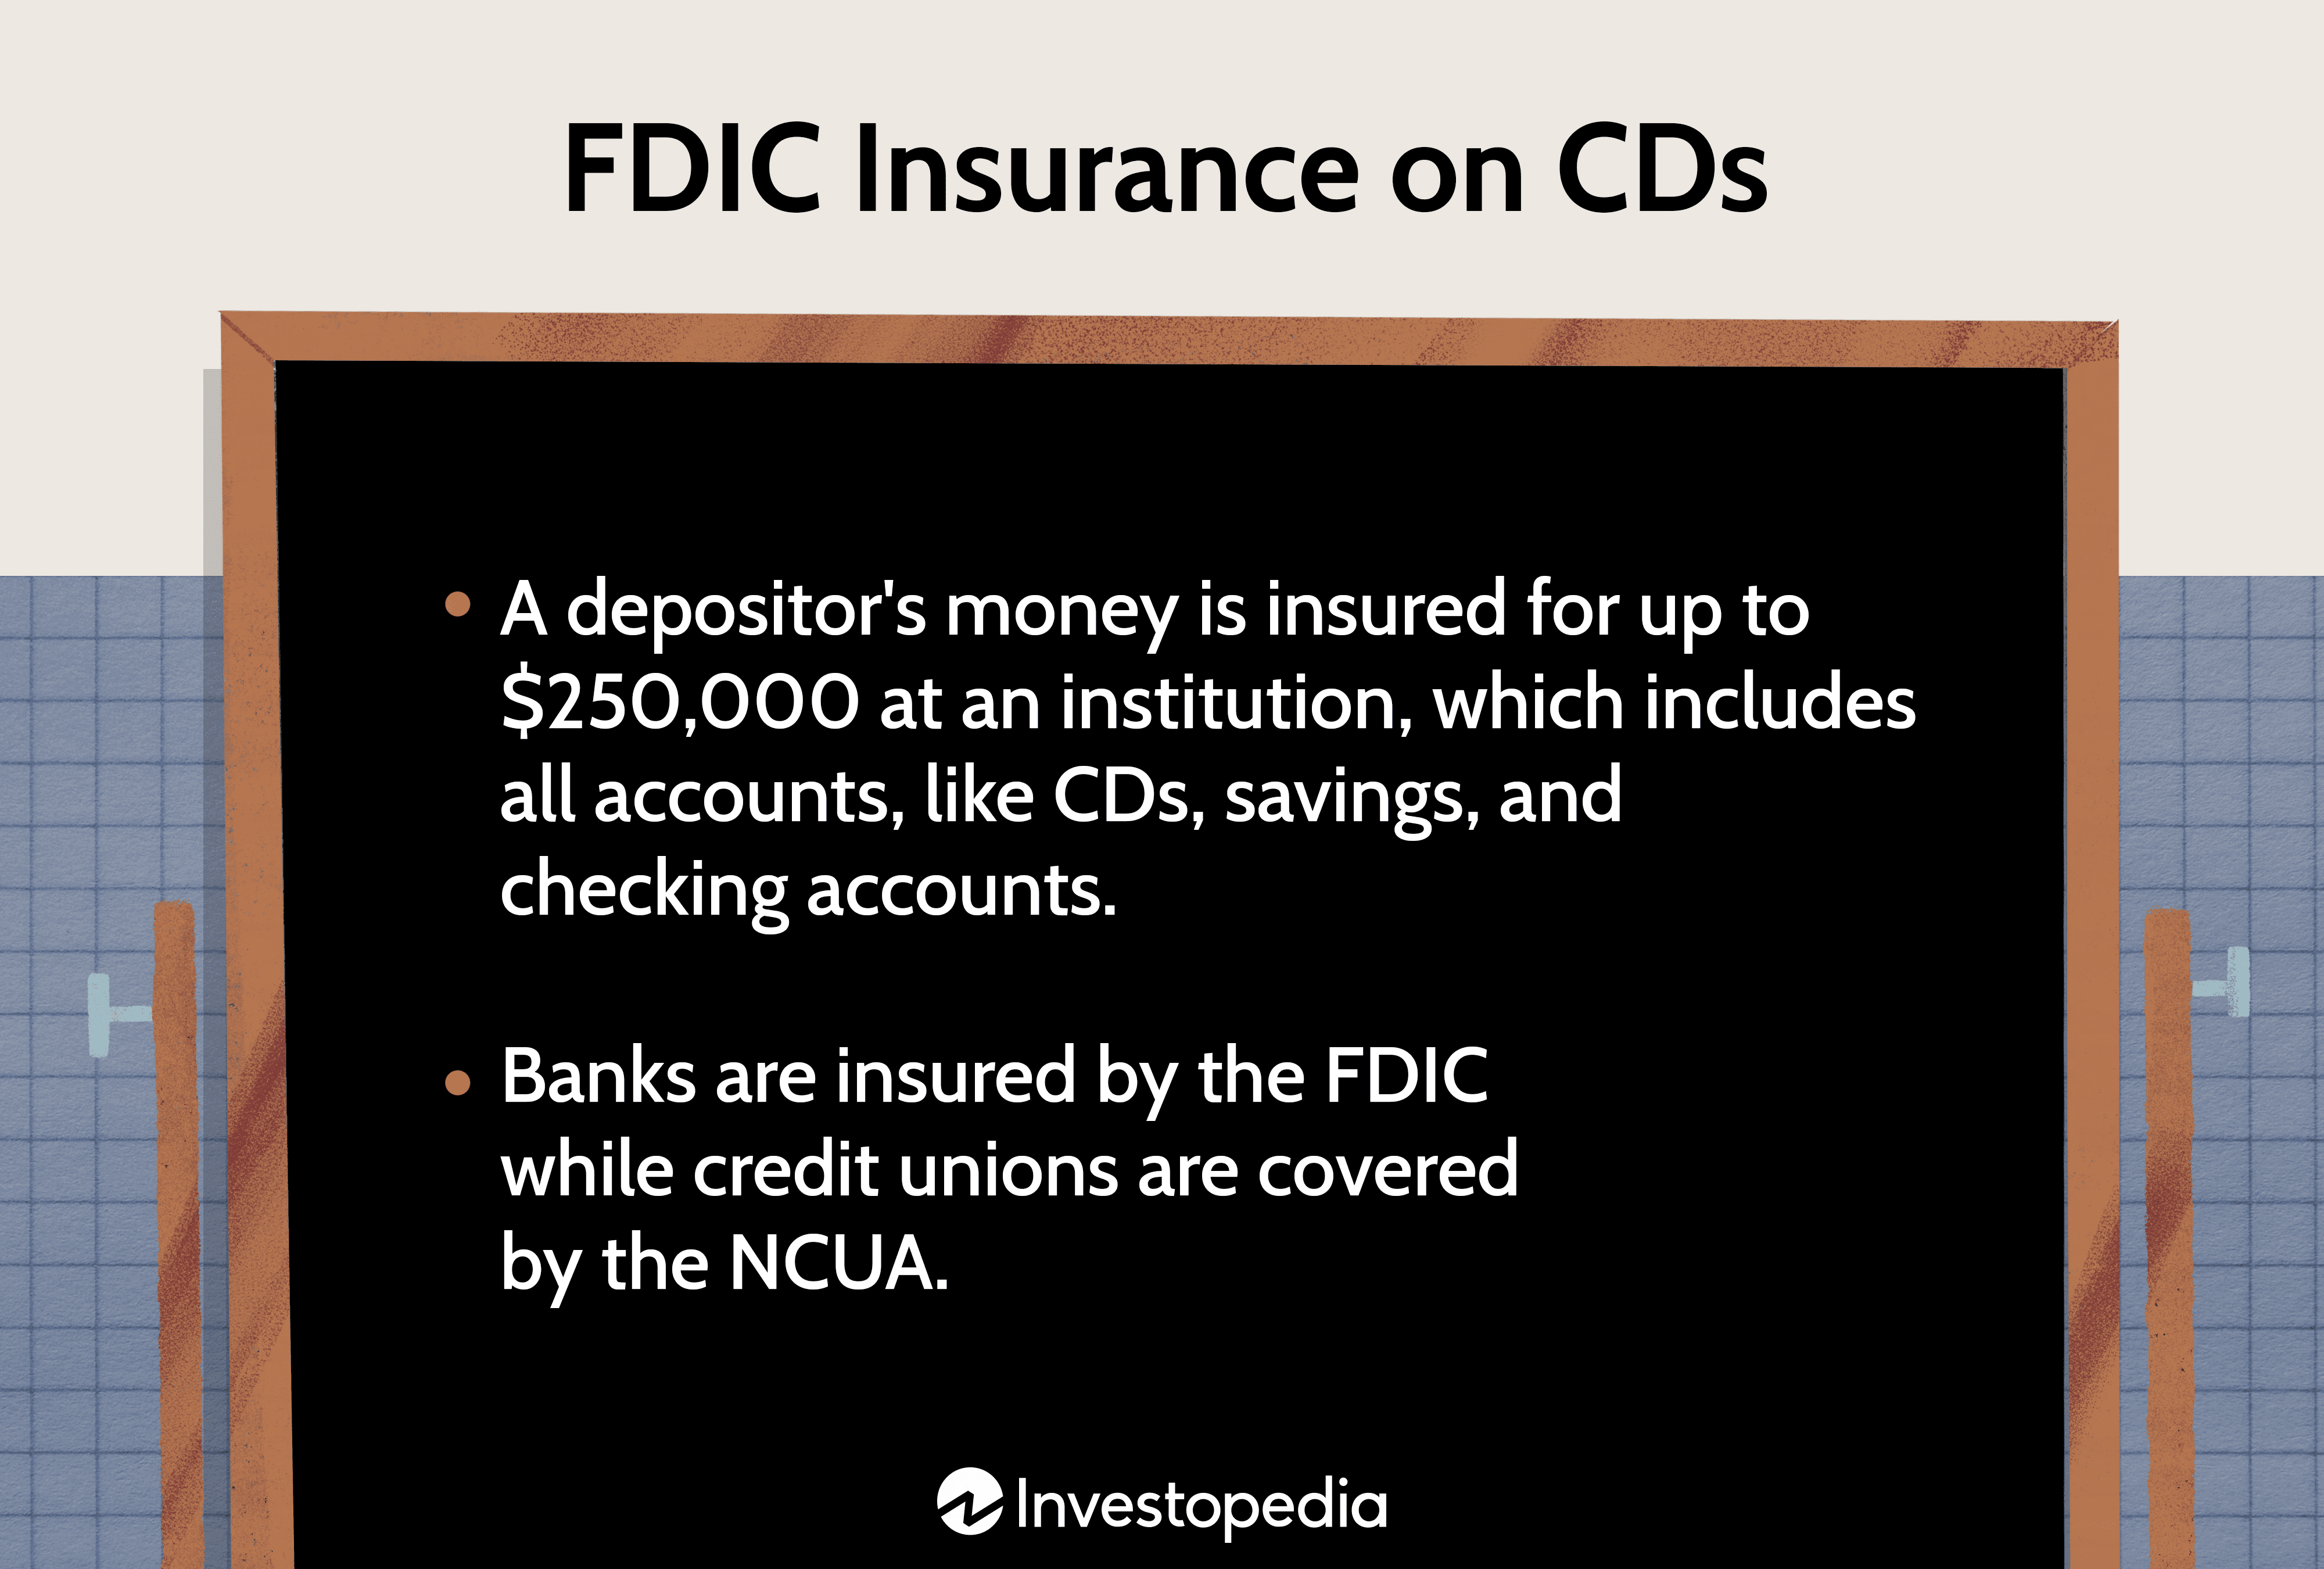 FDIC Insurance on CDs